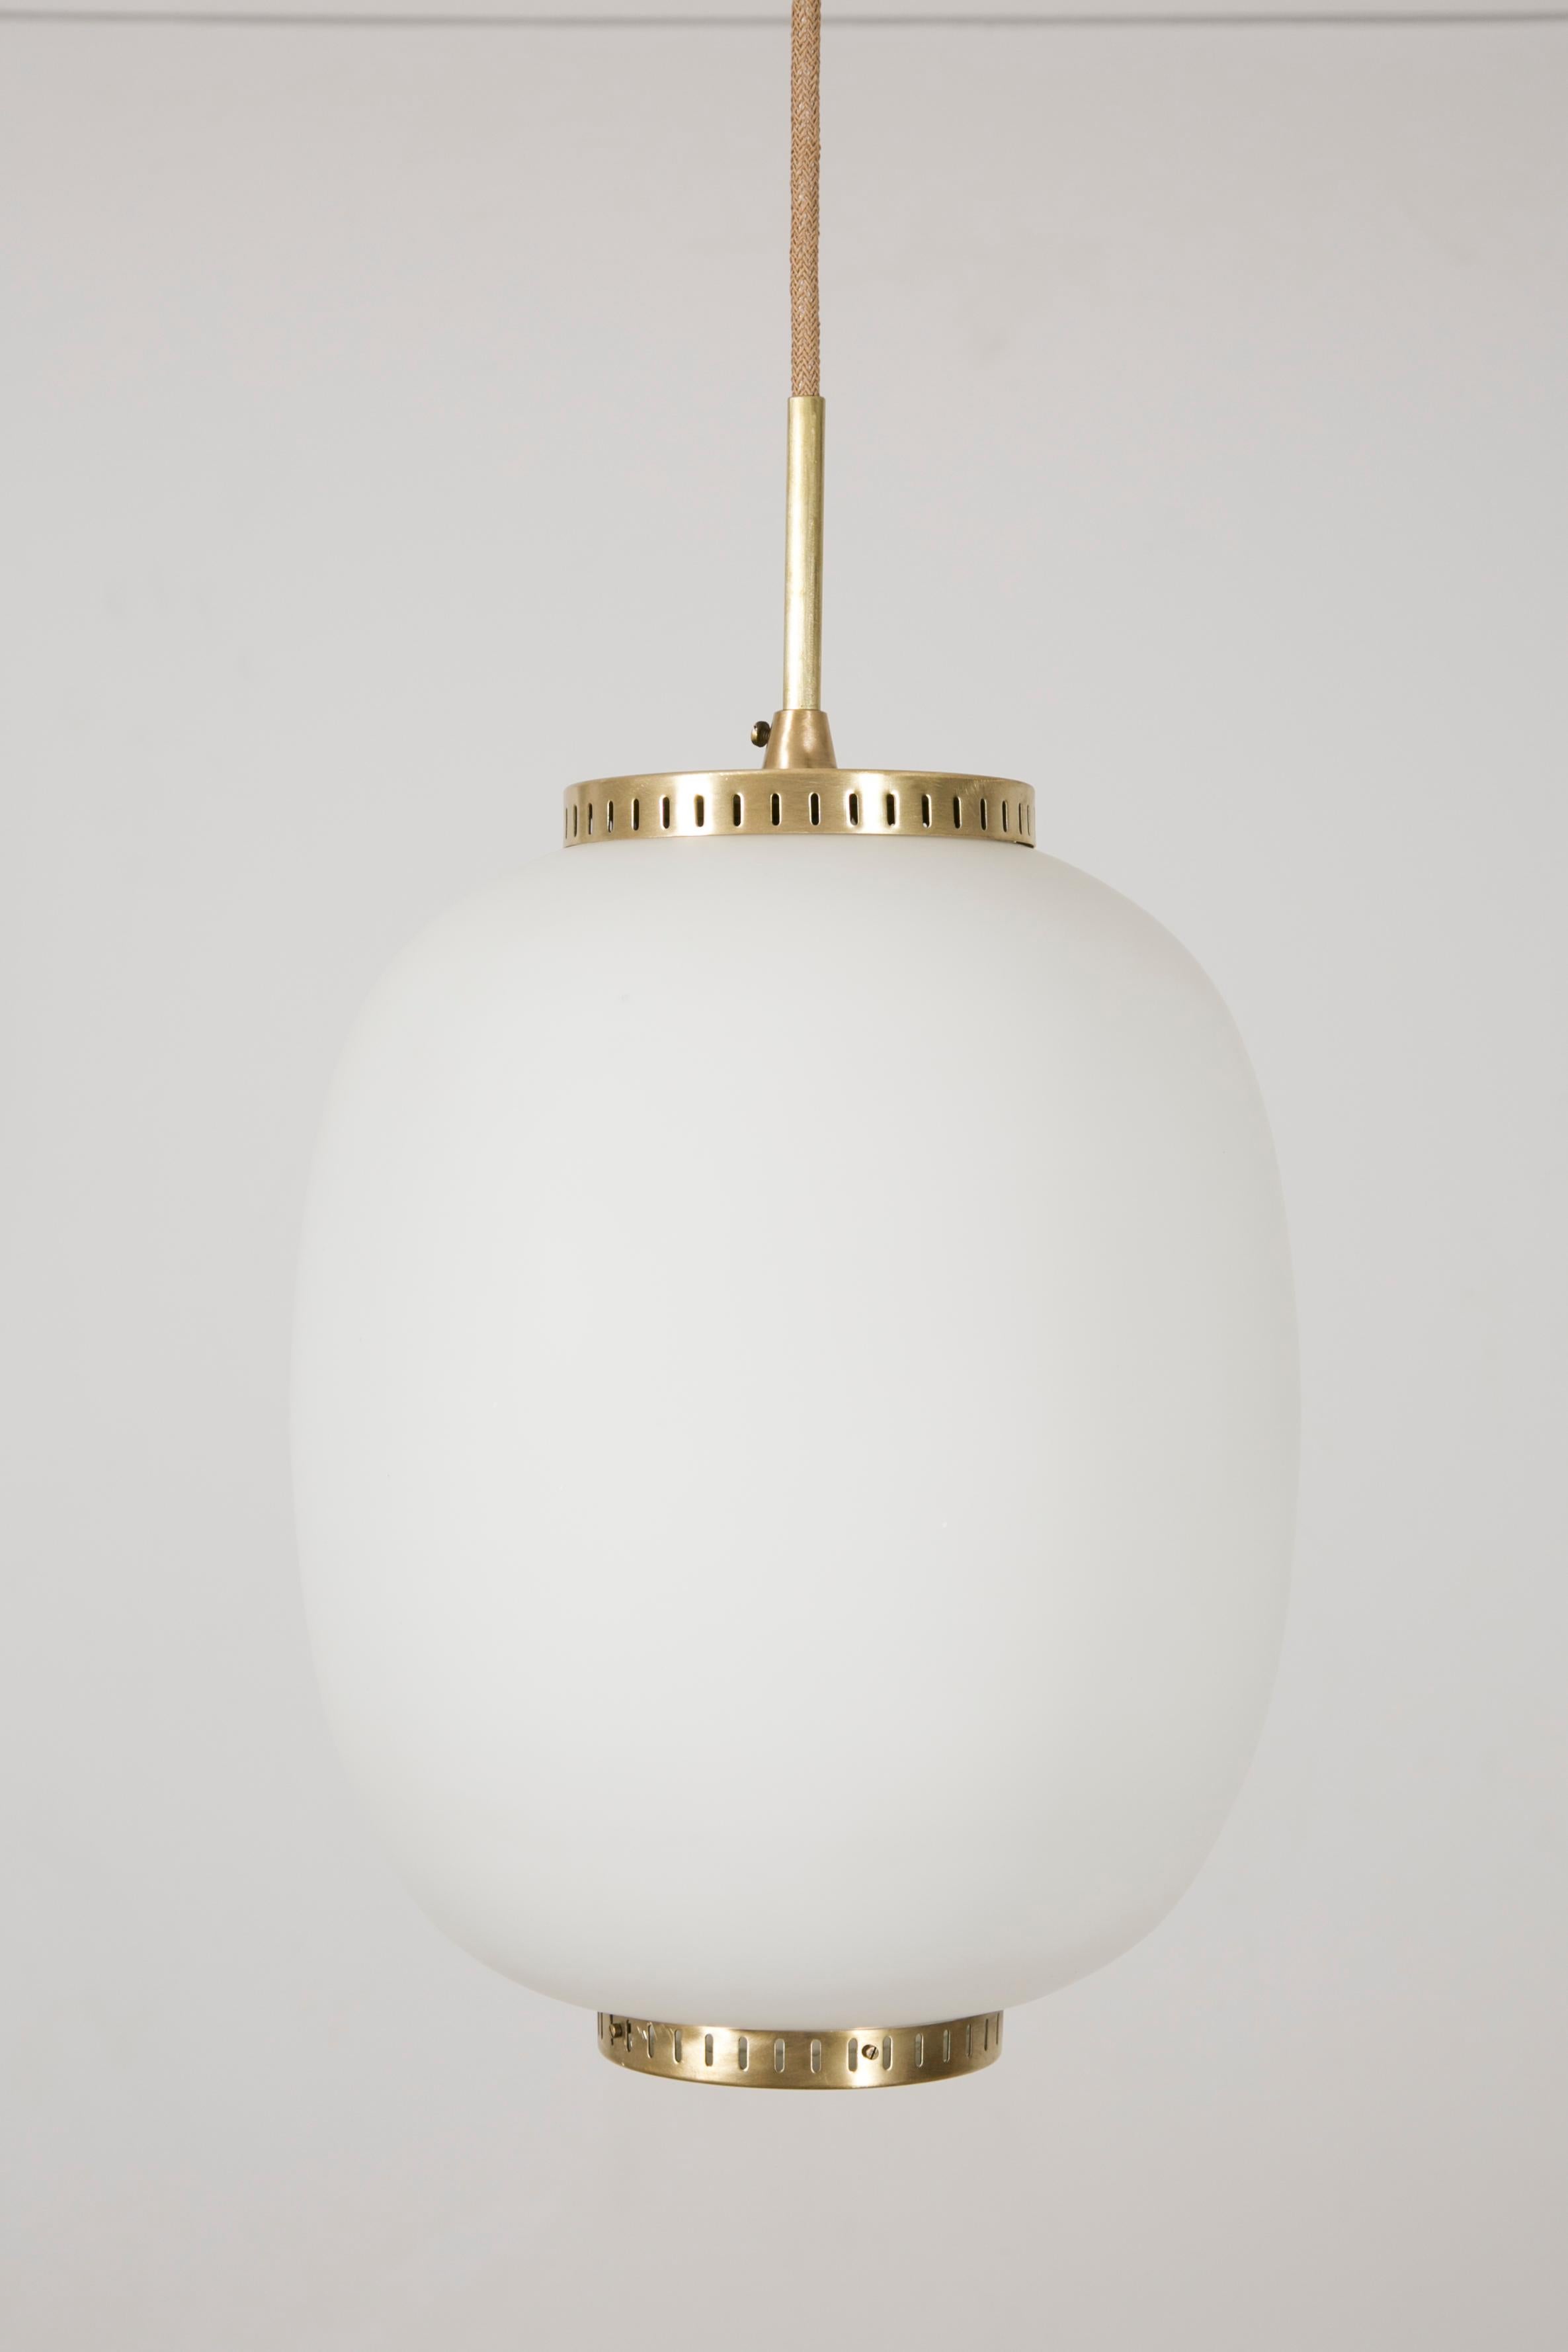 Scandinavian Modern Collection of 5 Opaline Glass and Brass Ceiling Fixtures, Bent Karlby for Lyfa